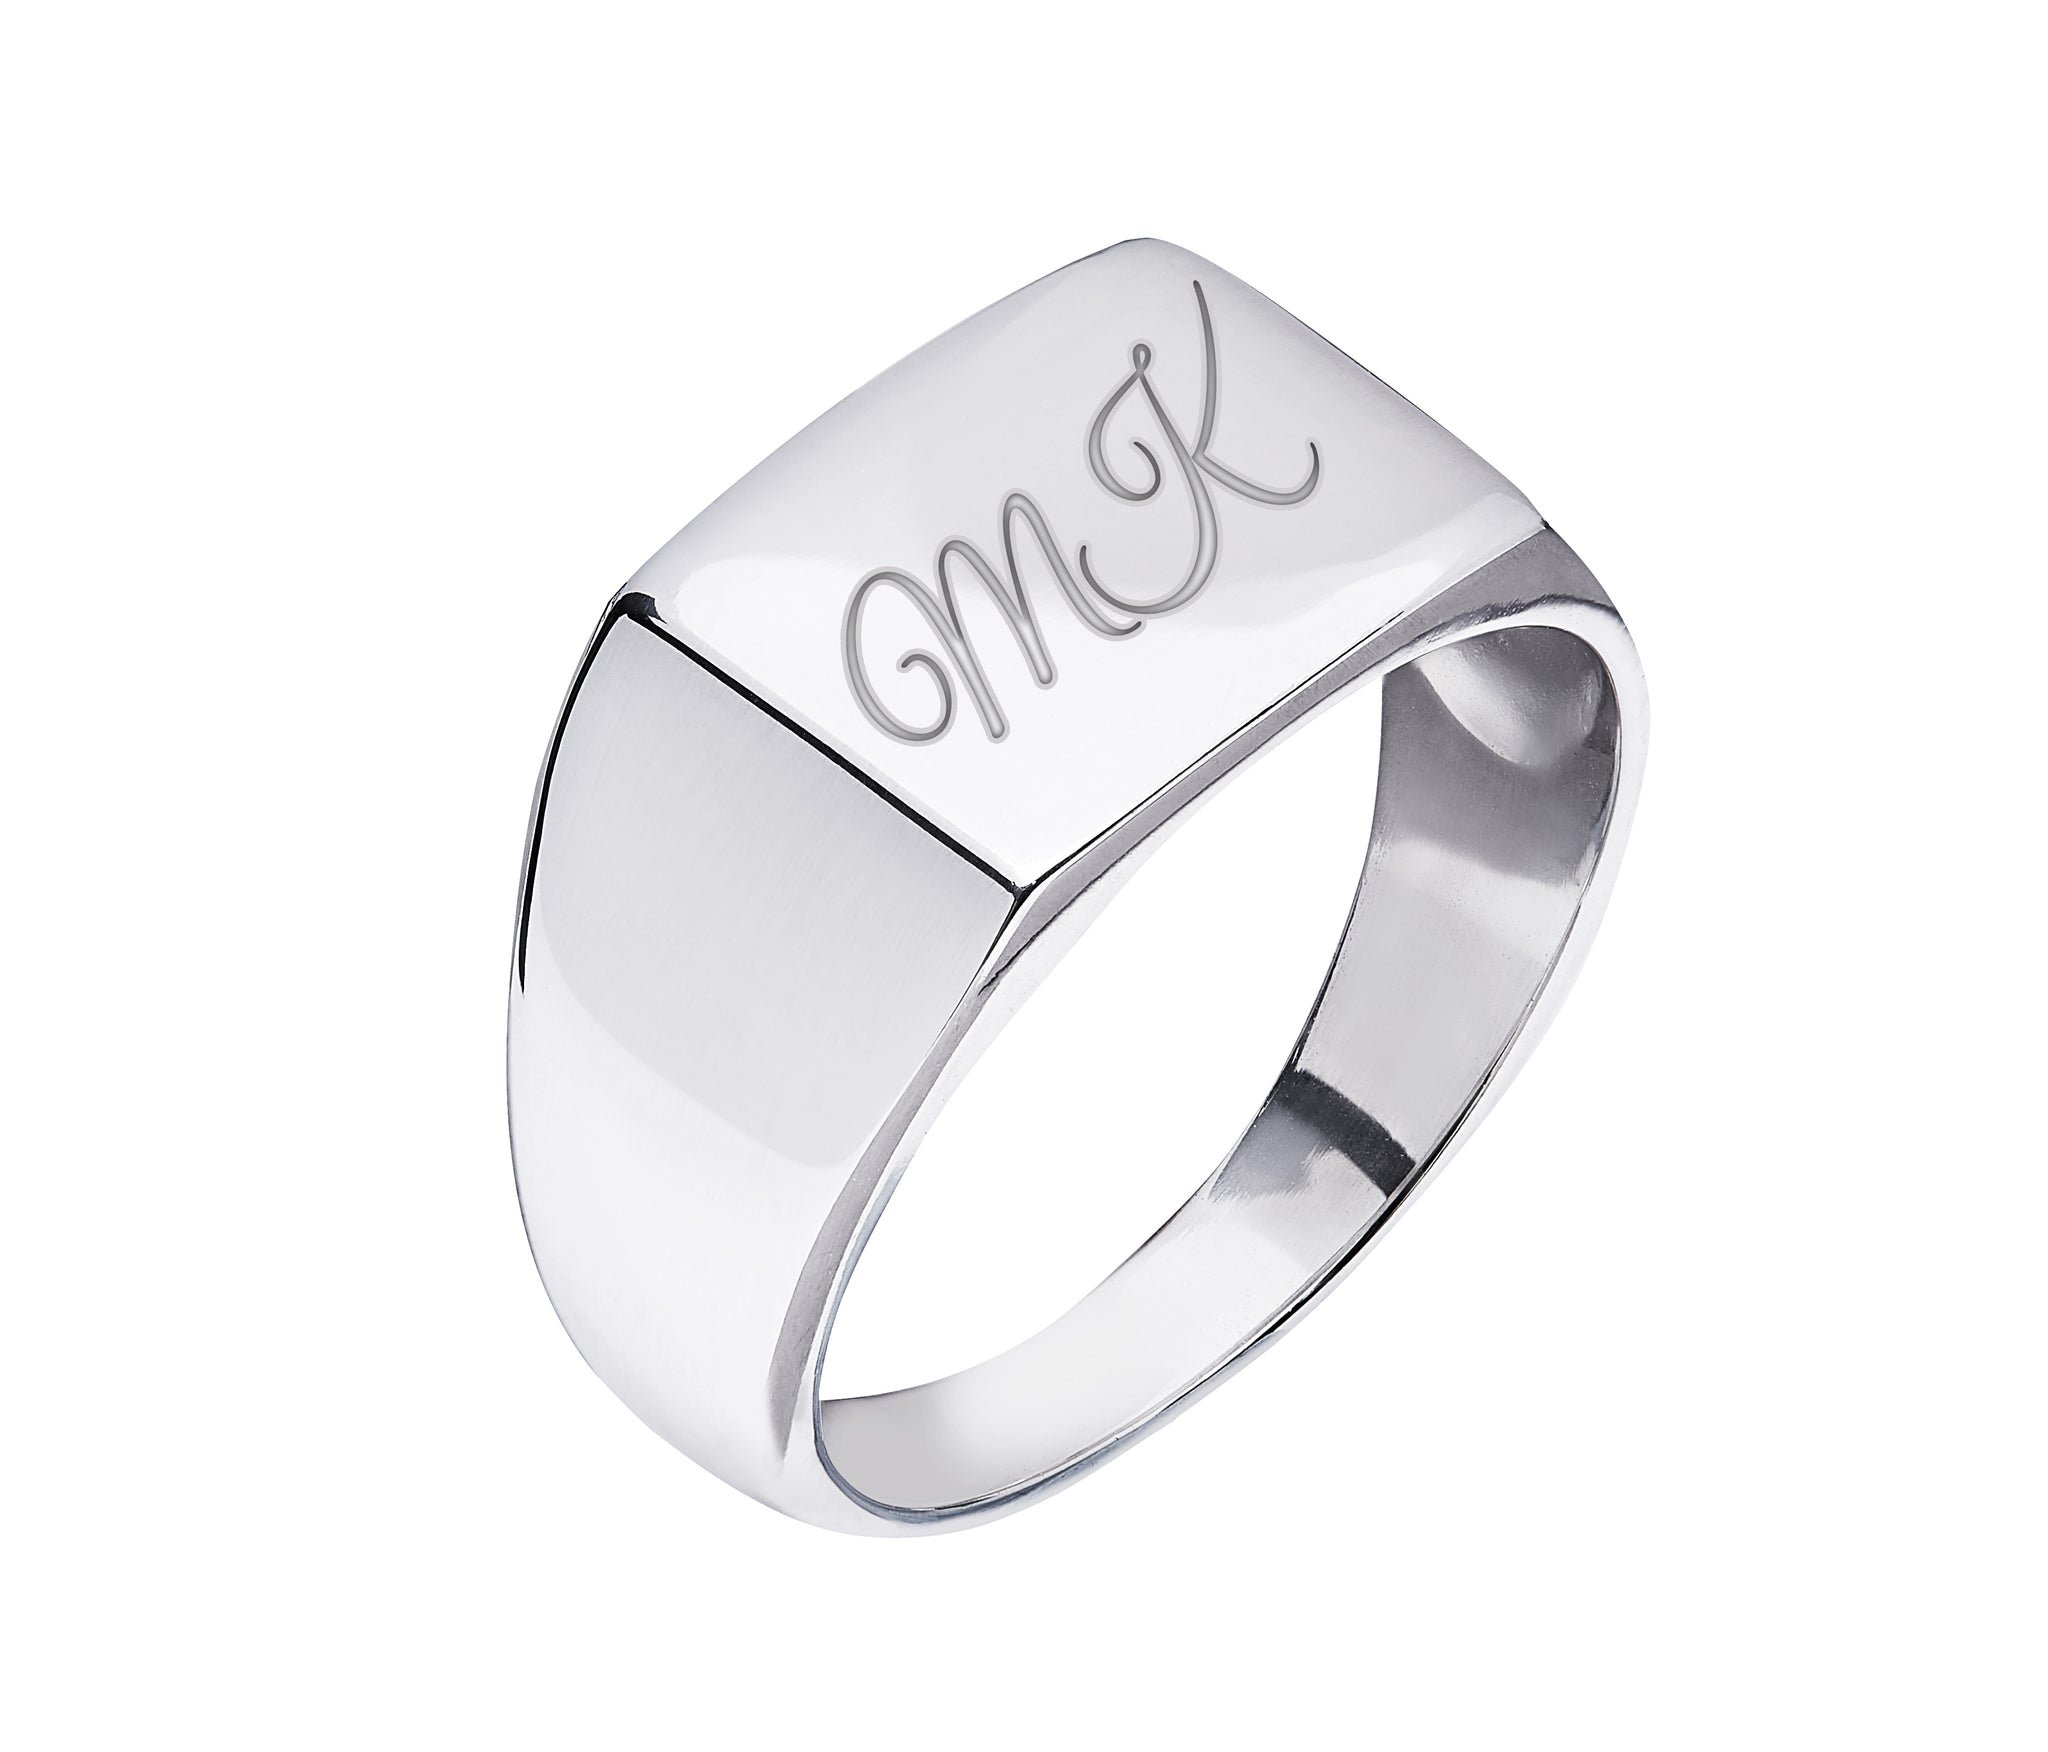 Embrace Spirituality: 22 KT Gold Om Ring for Men - Buy Now at Bhima Online!